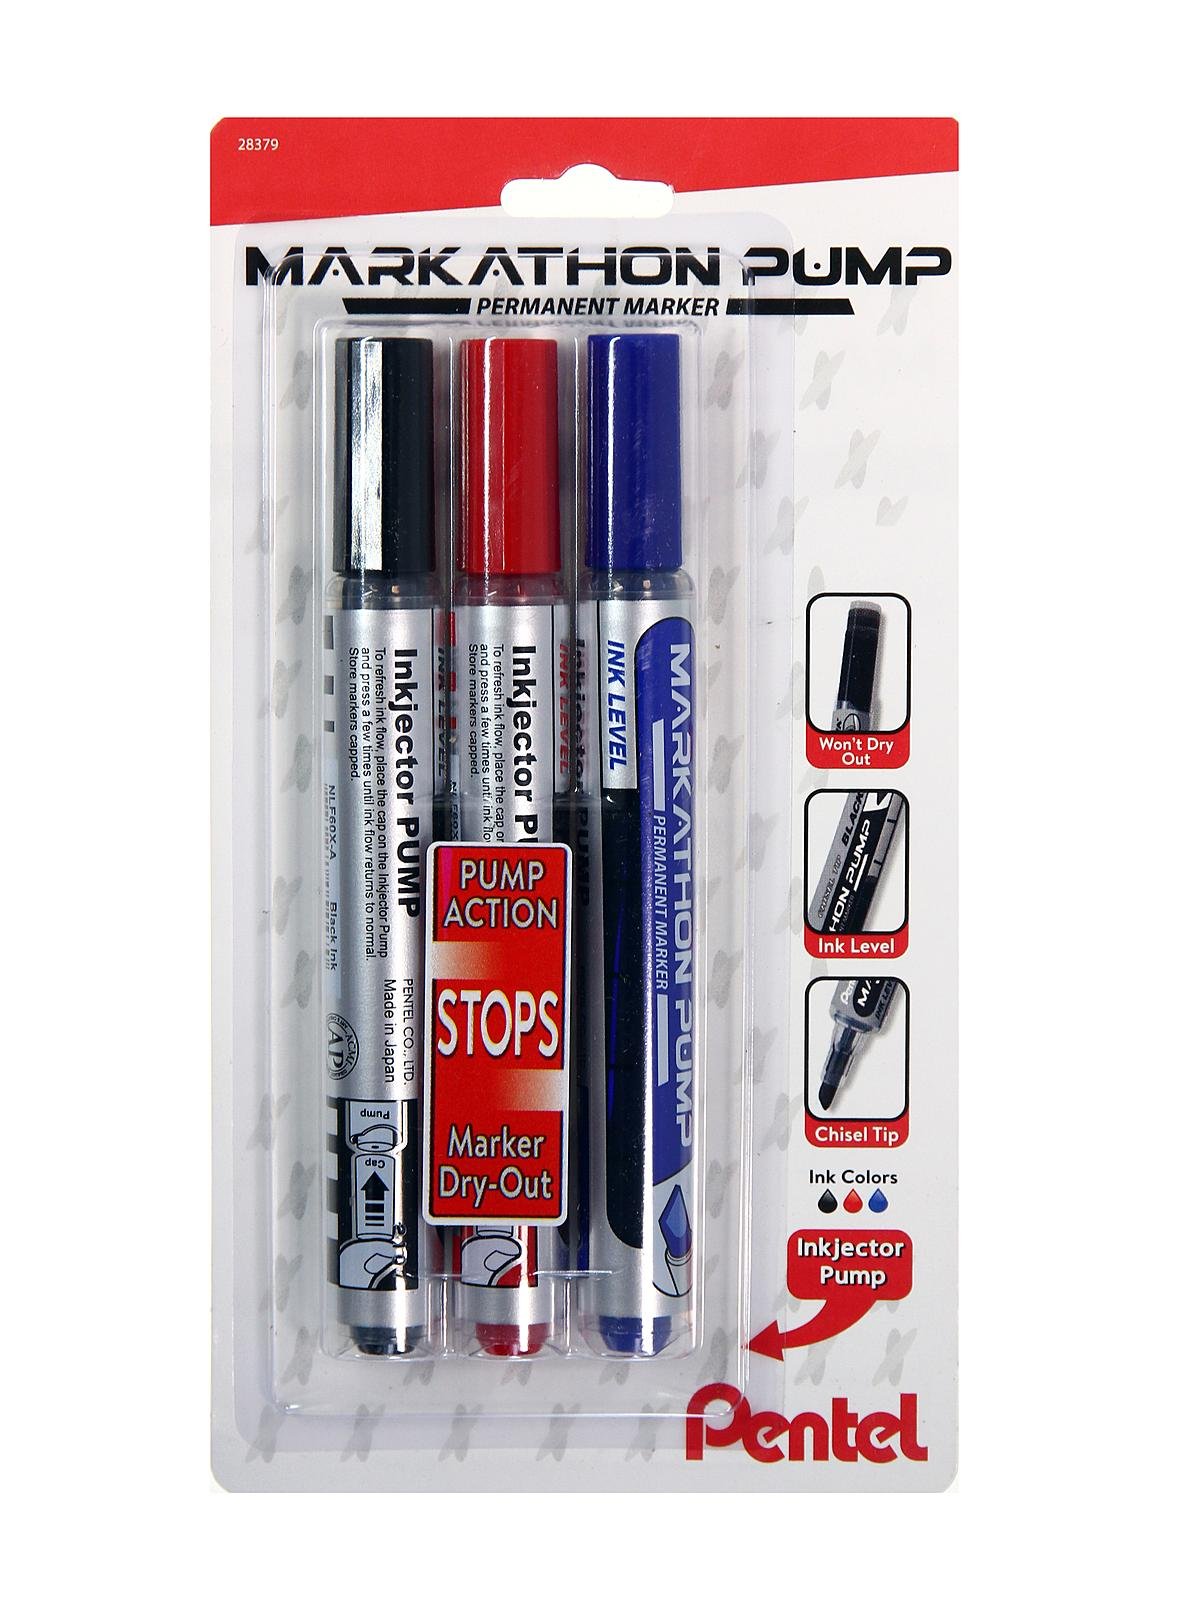 Pentel - Markathon Pump Permanent Marker Sets